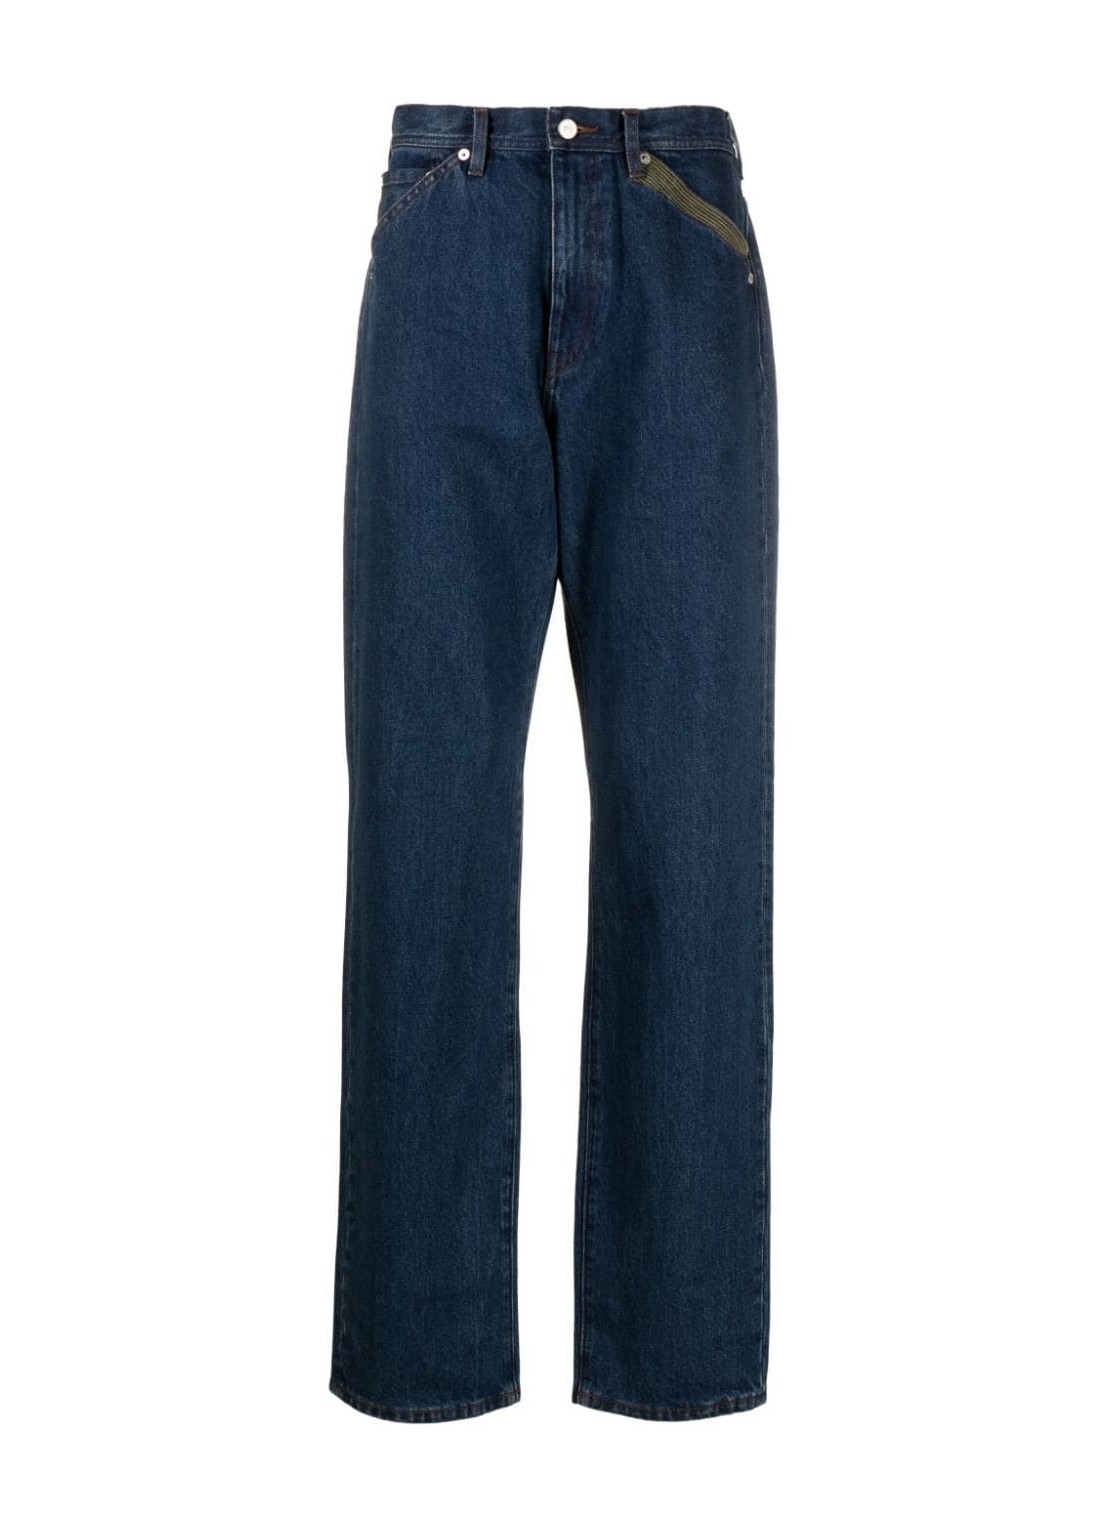 Pantalon jeans ps denim man mens workwear trouser m2r460yem21984 dk talla 34R
 